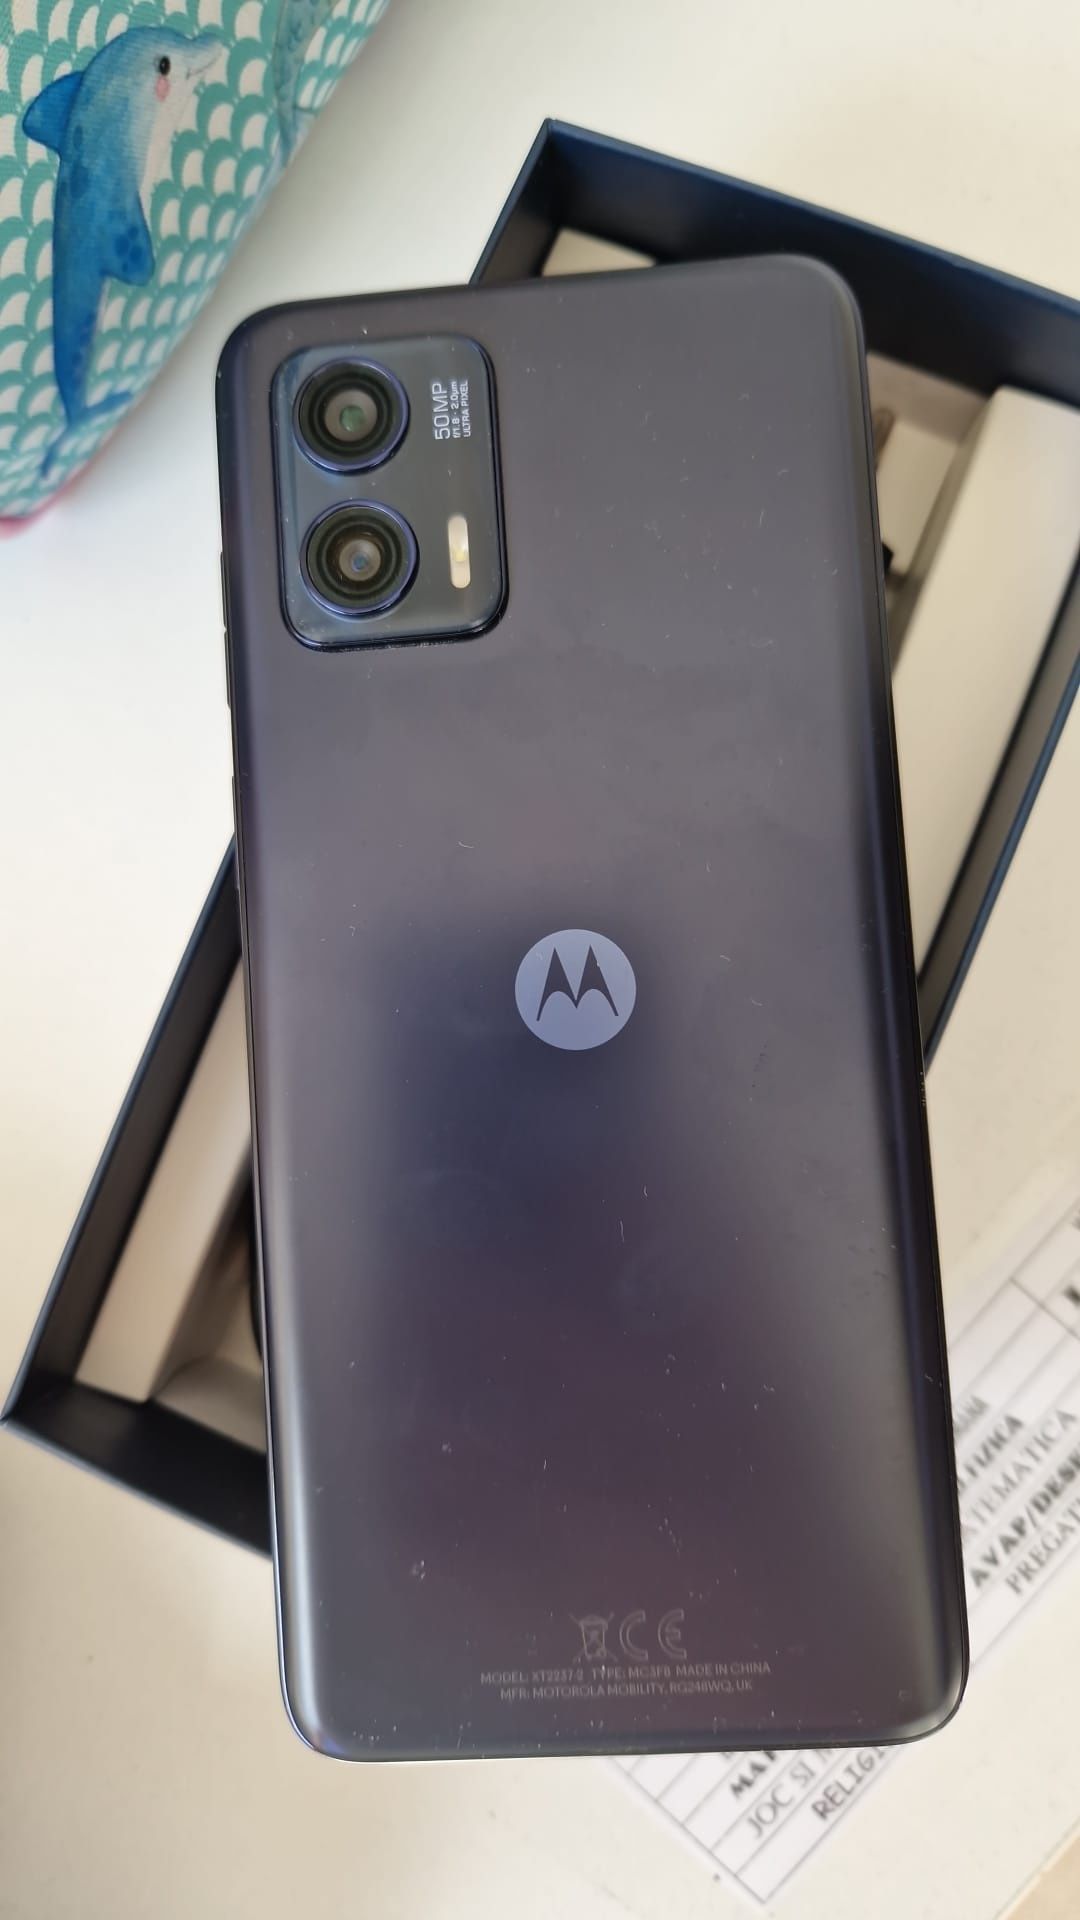 Telefon Motorola G73